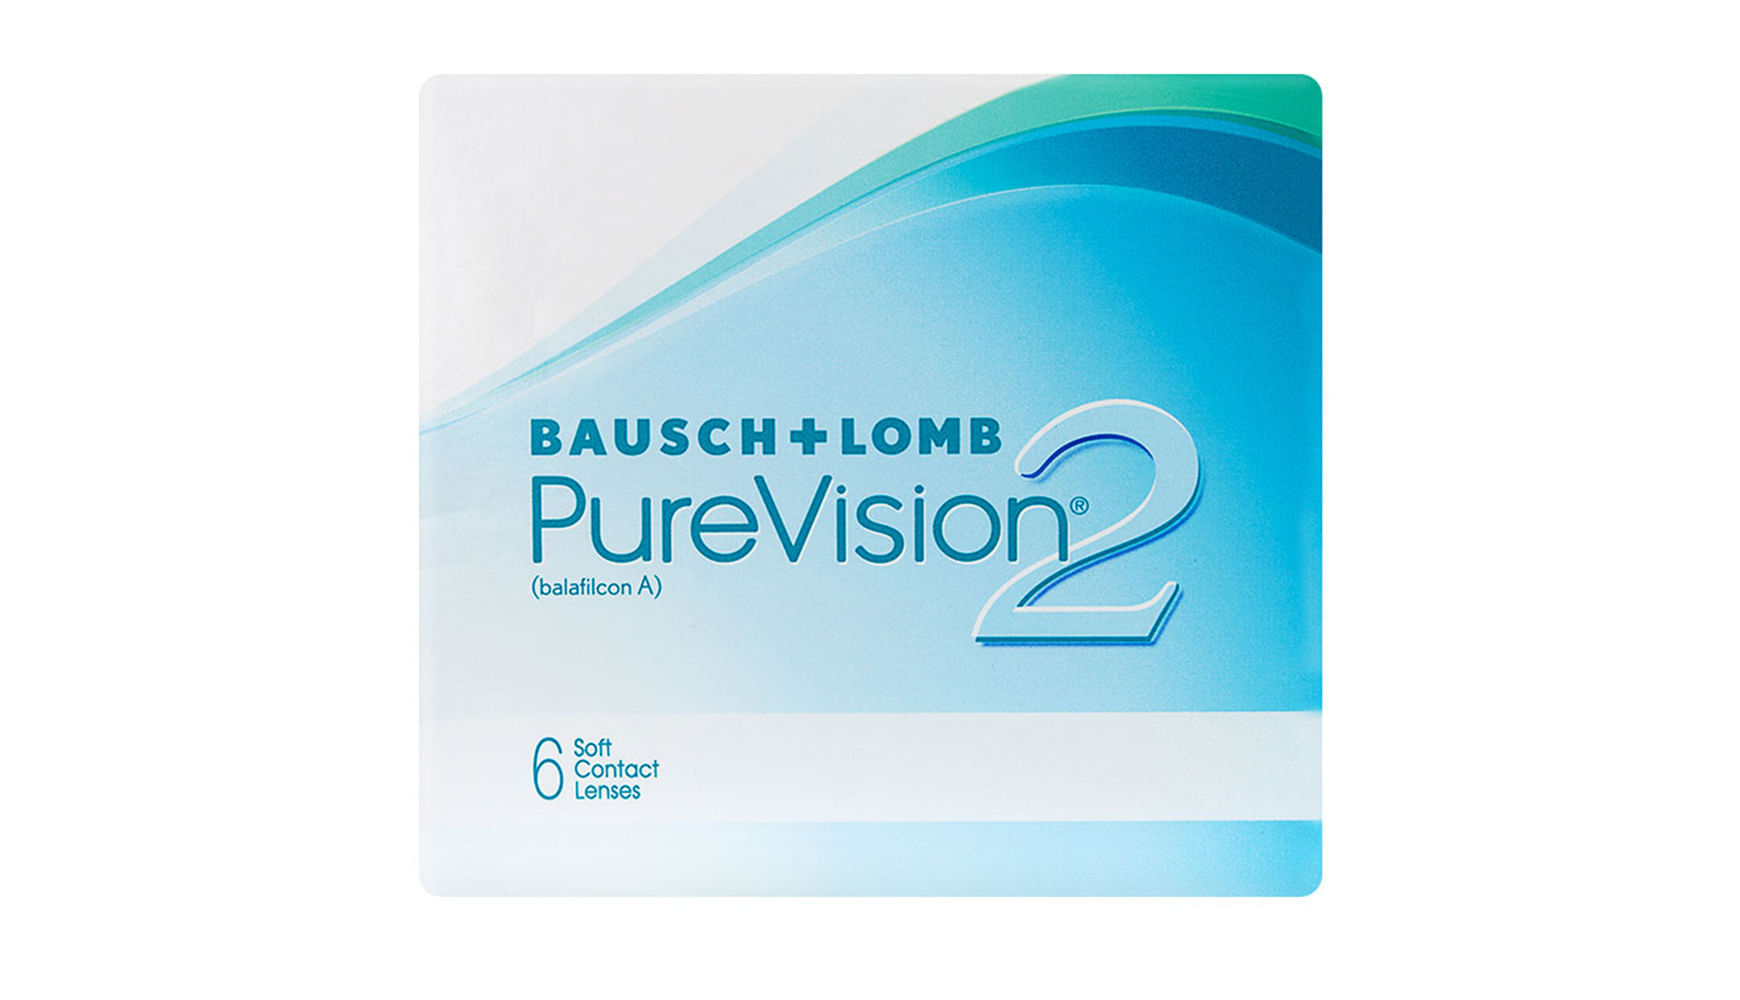 Purevision 2